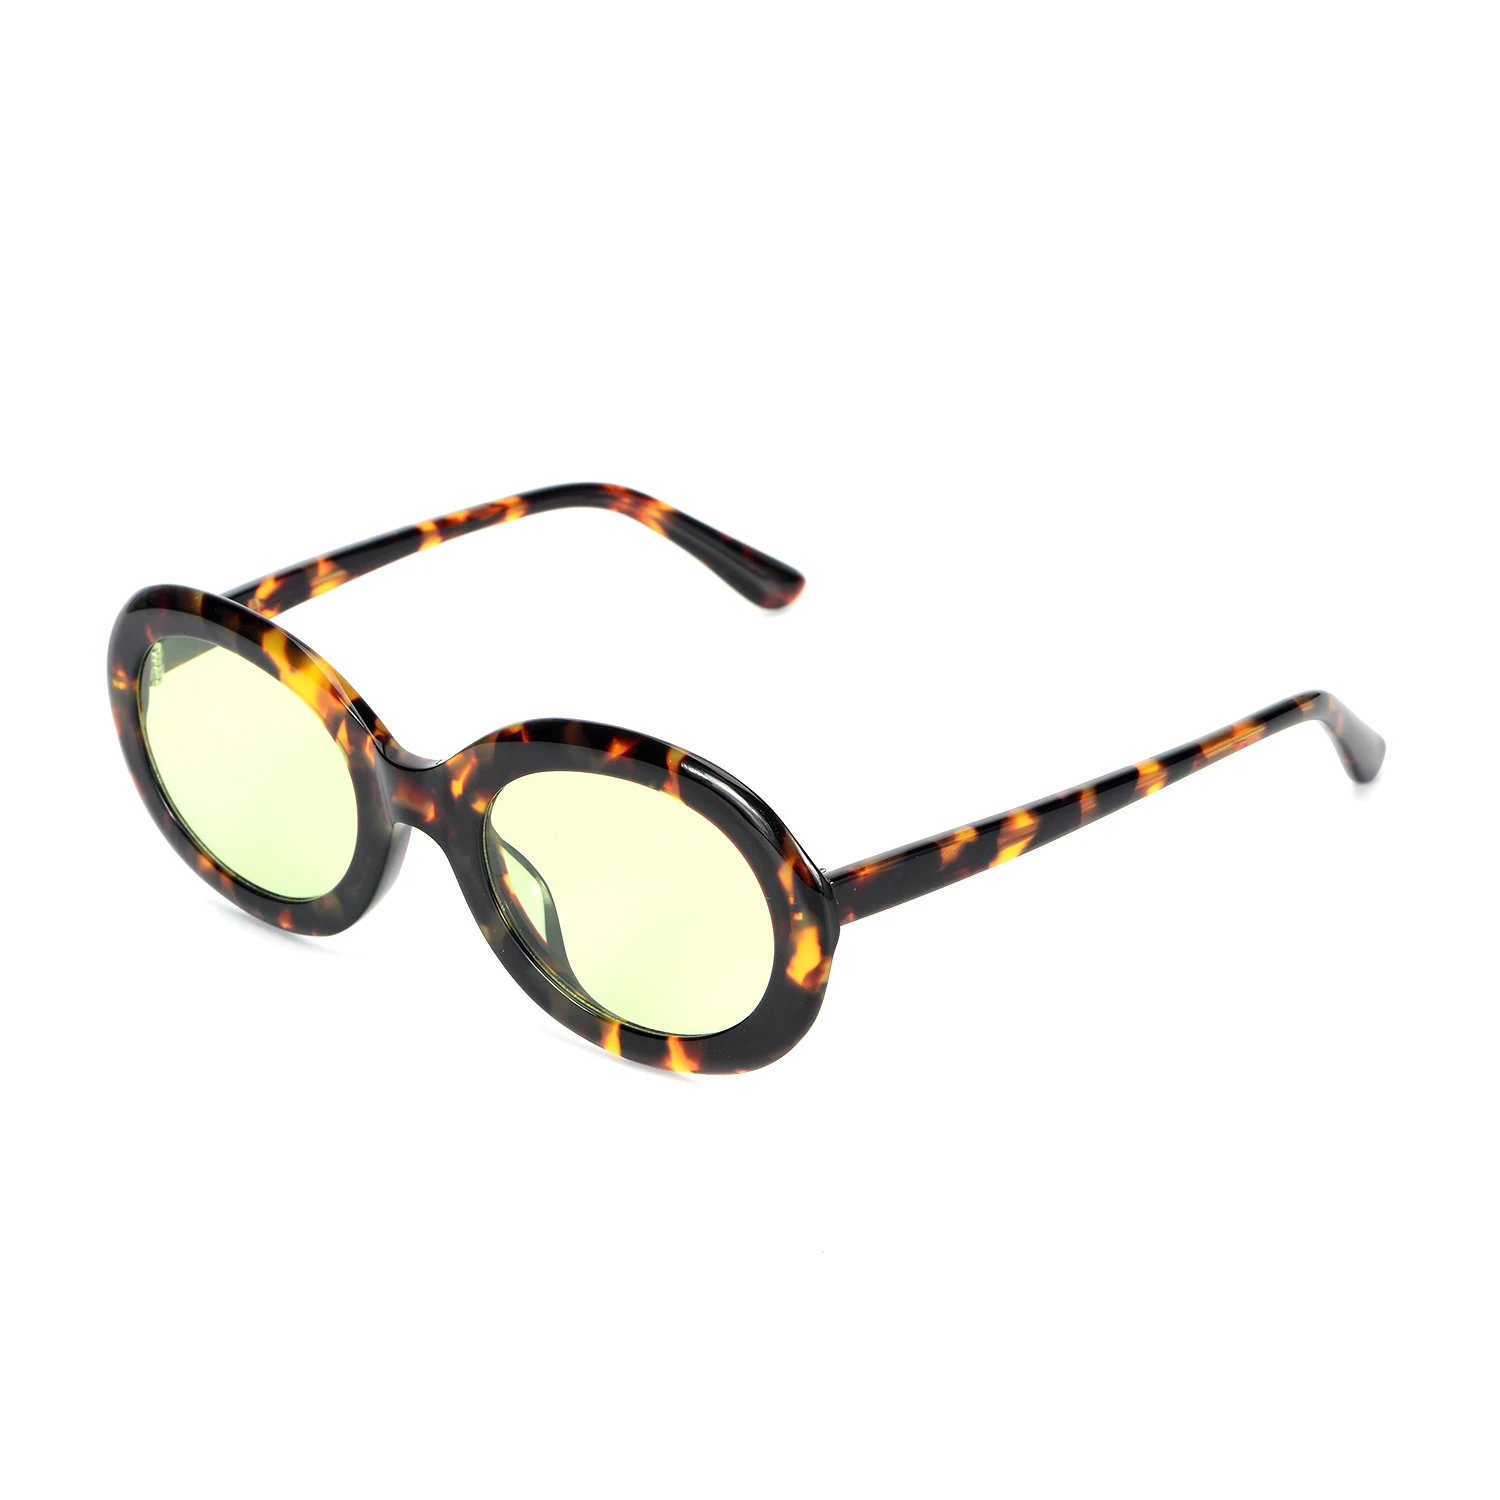 Whole Sunglasses Mazzucchelli Acetate Sunglasses For Women - Buy ...